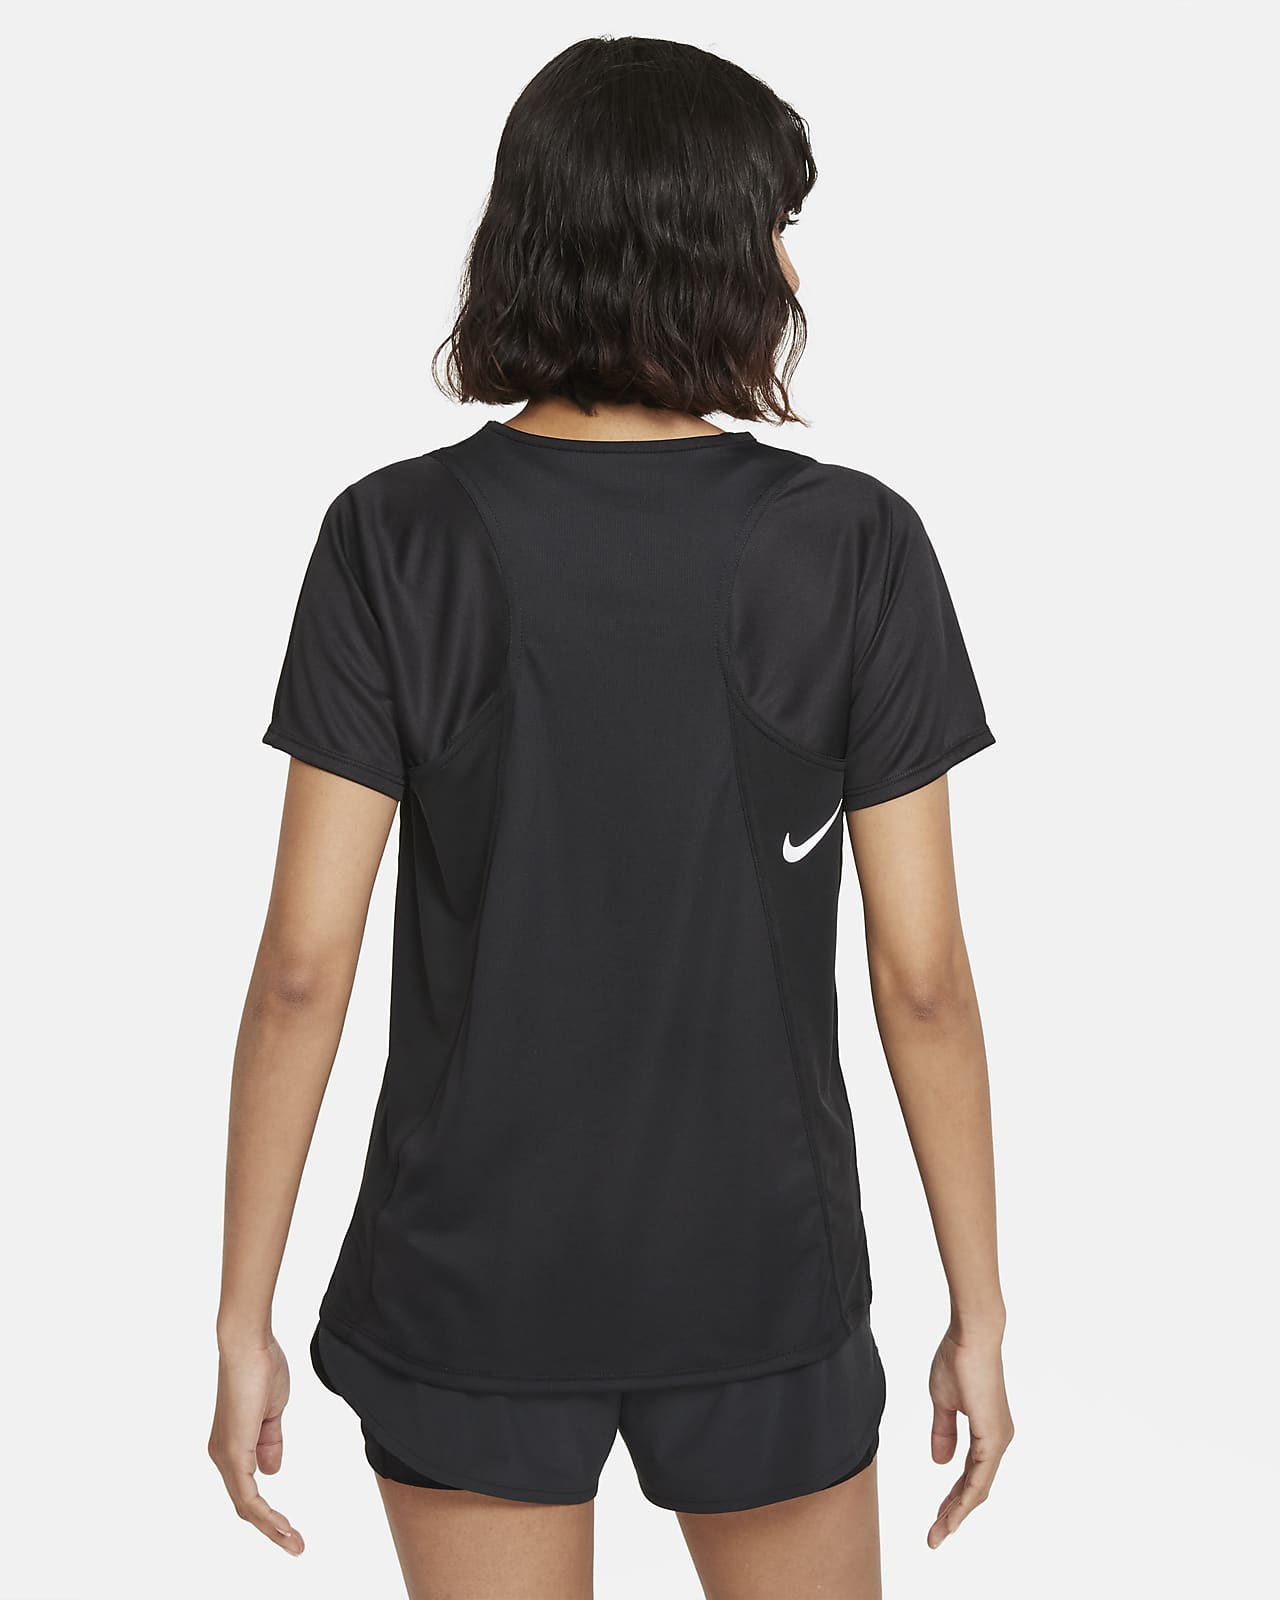 Nike Dri-FIT Race Women's Short-Sleeve Running Top. Nike NZ